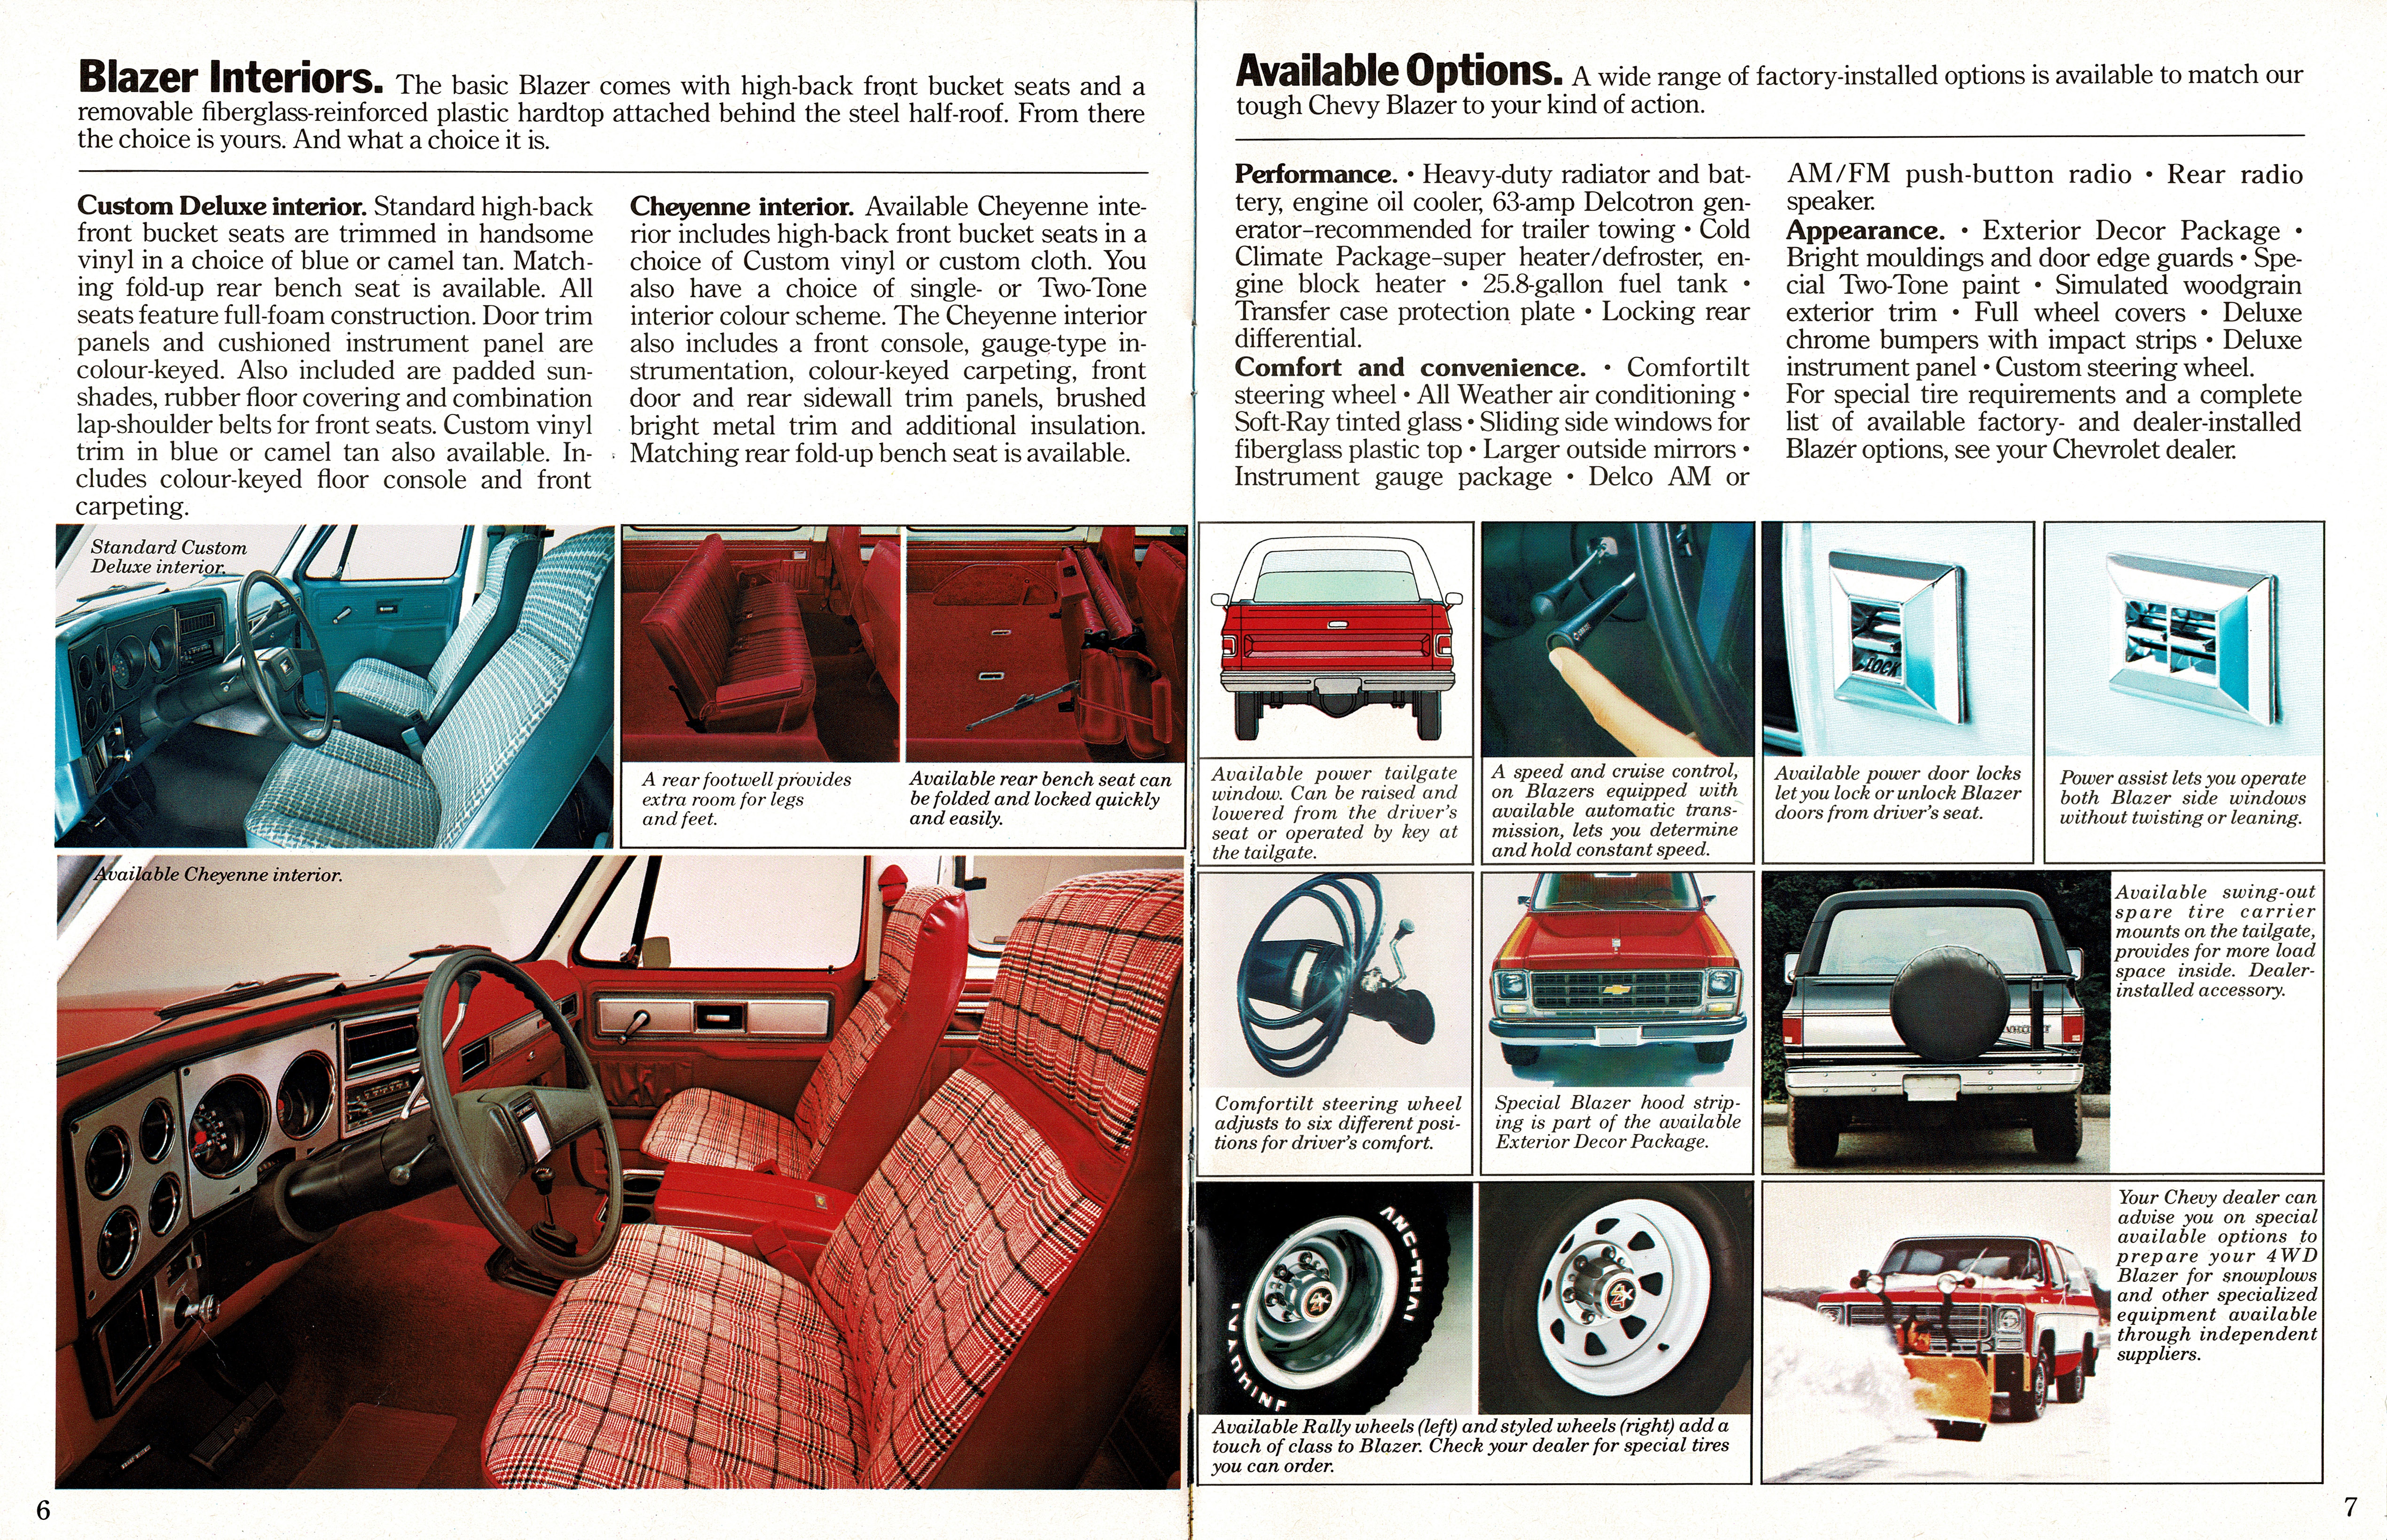 1979 Chevrolet Blazer 09-78 Canada_Page_4